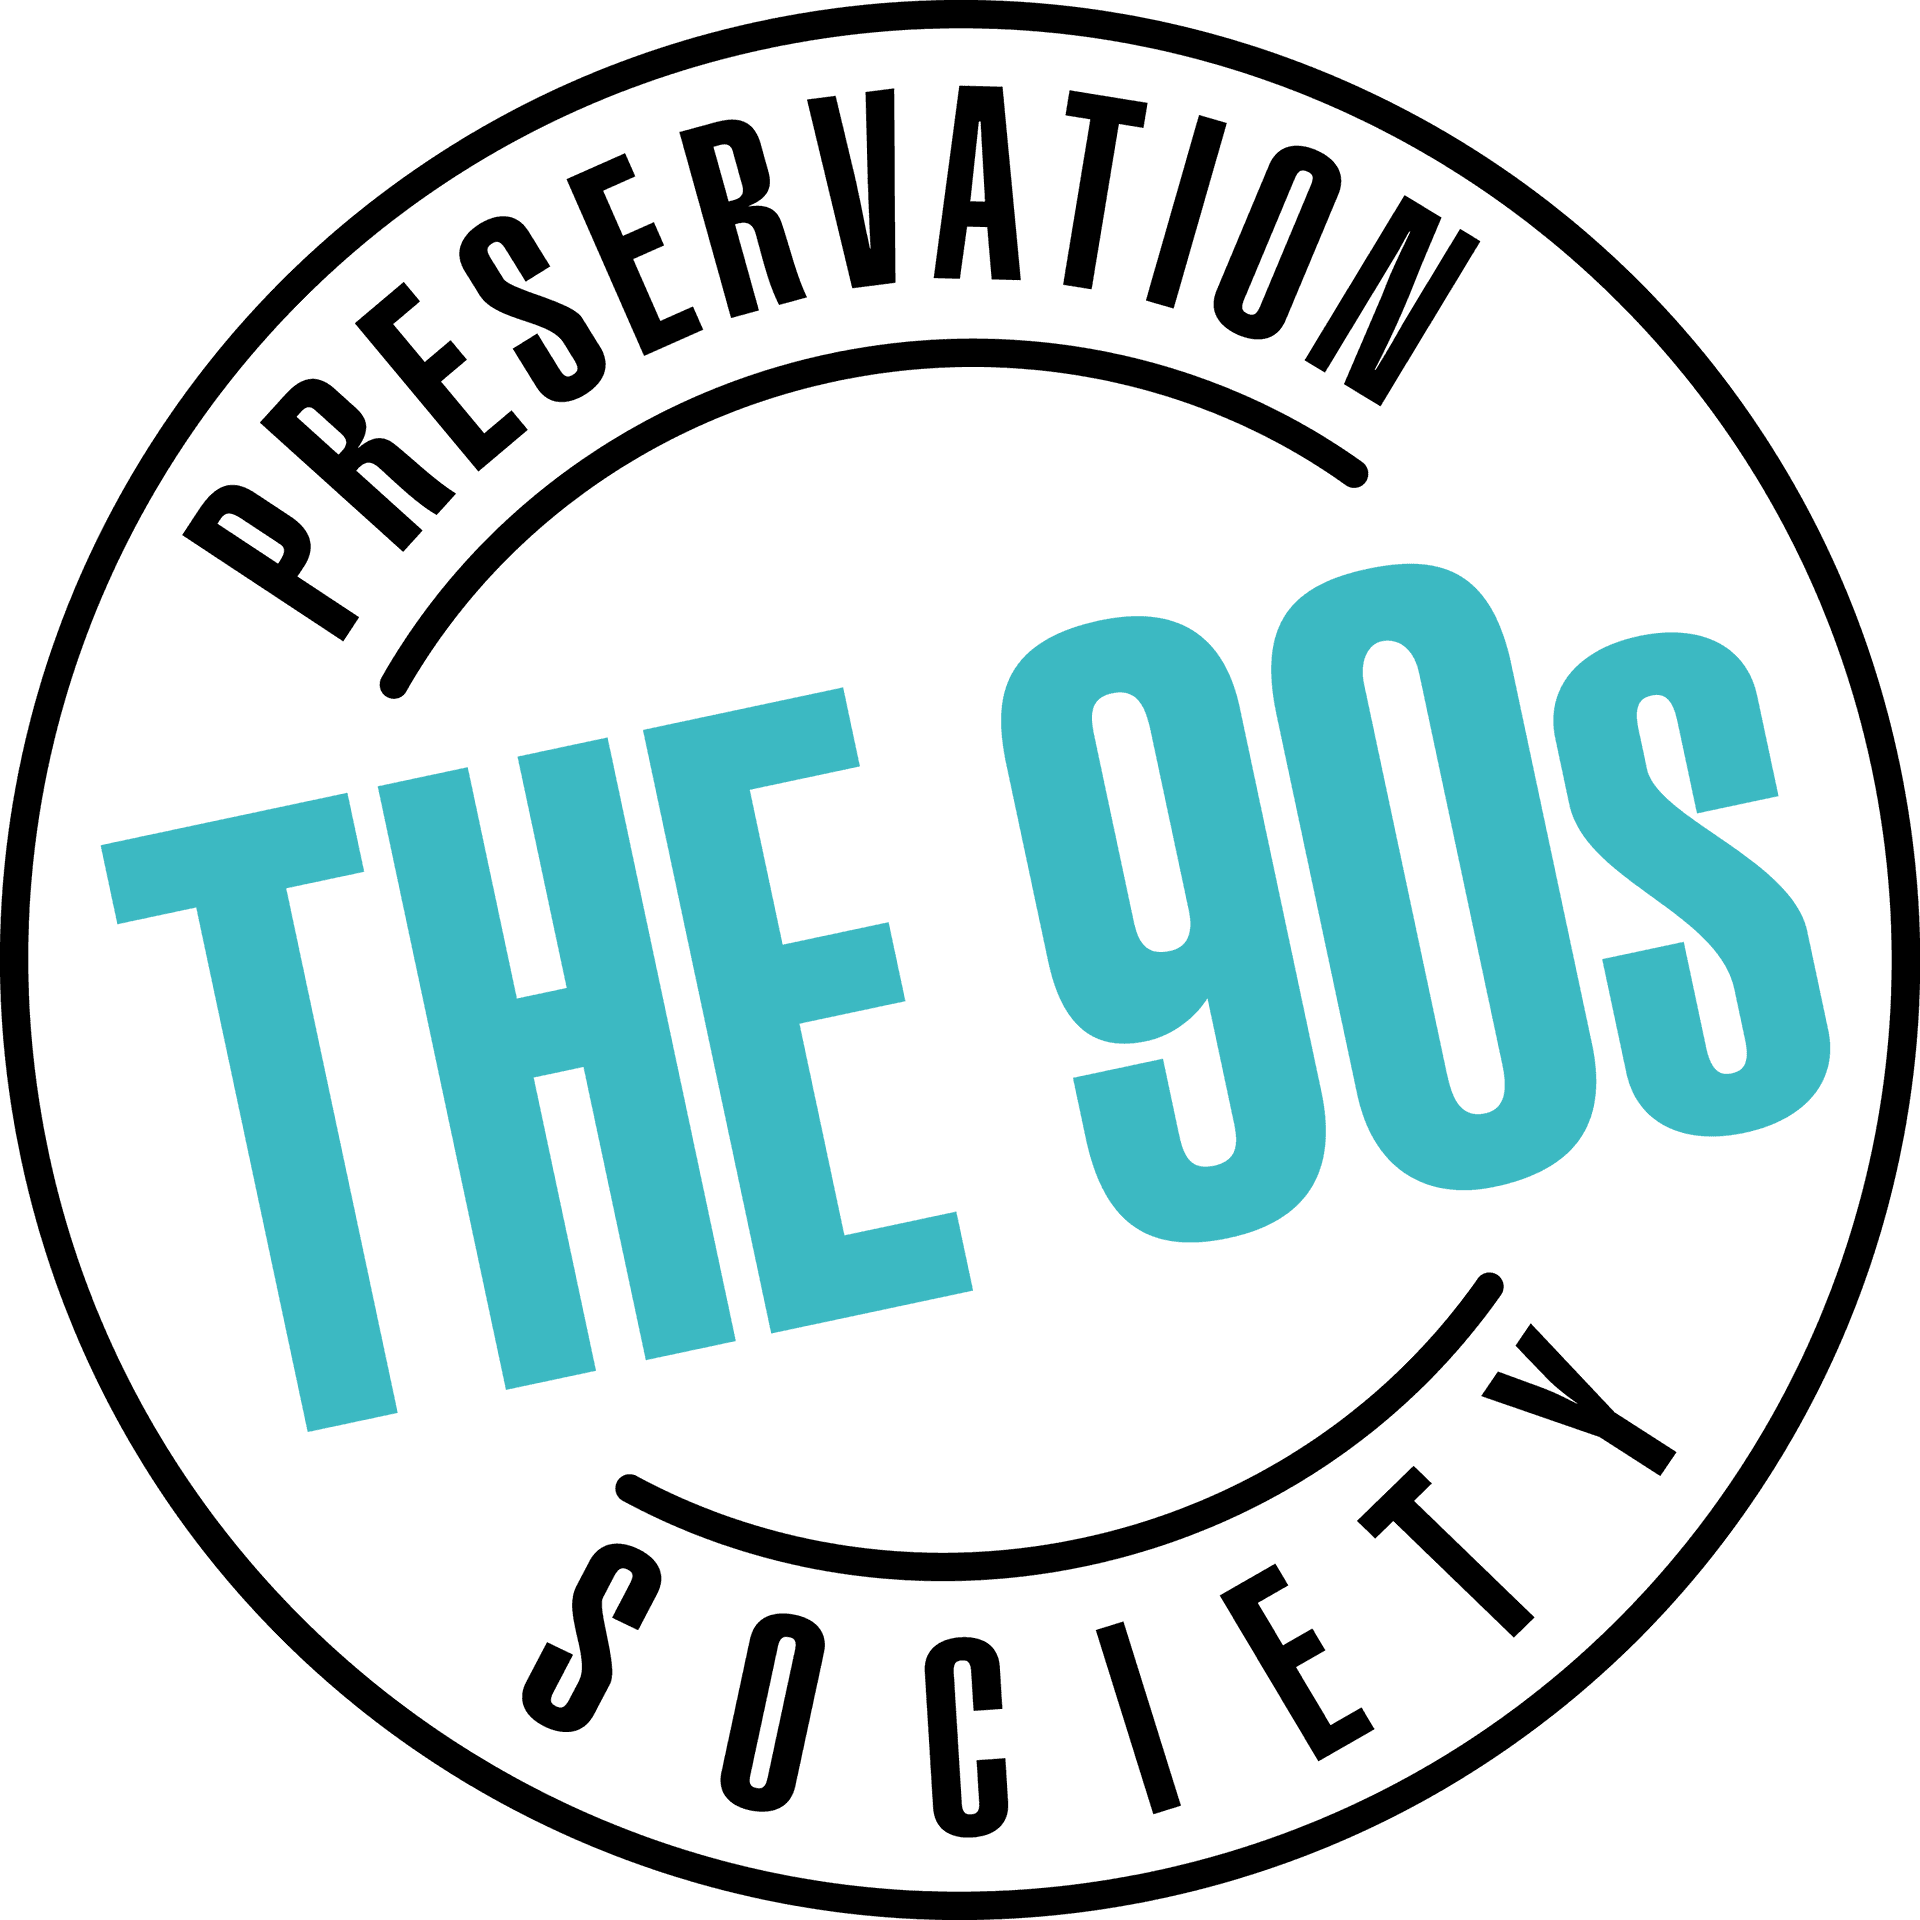 90s Preservation Society Logo PNG image